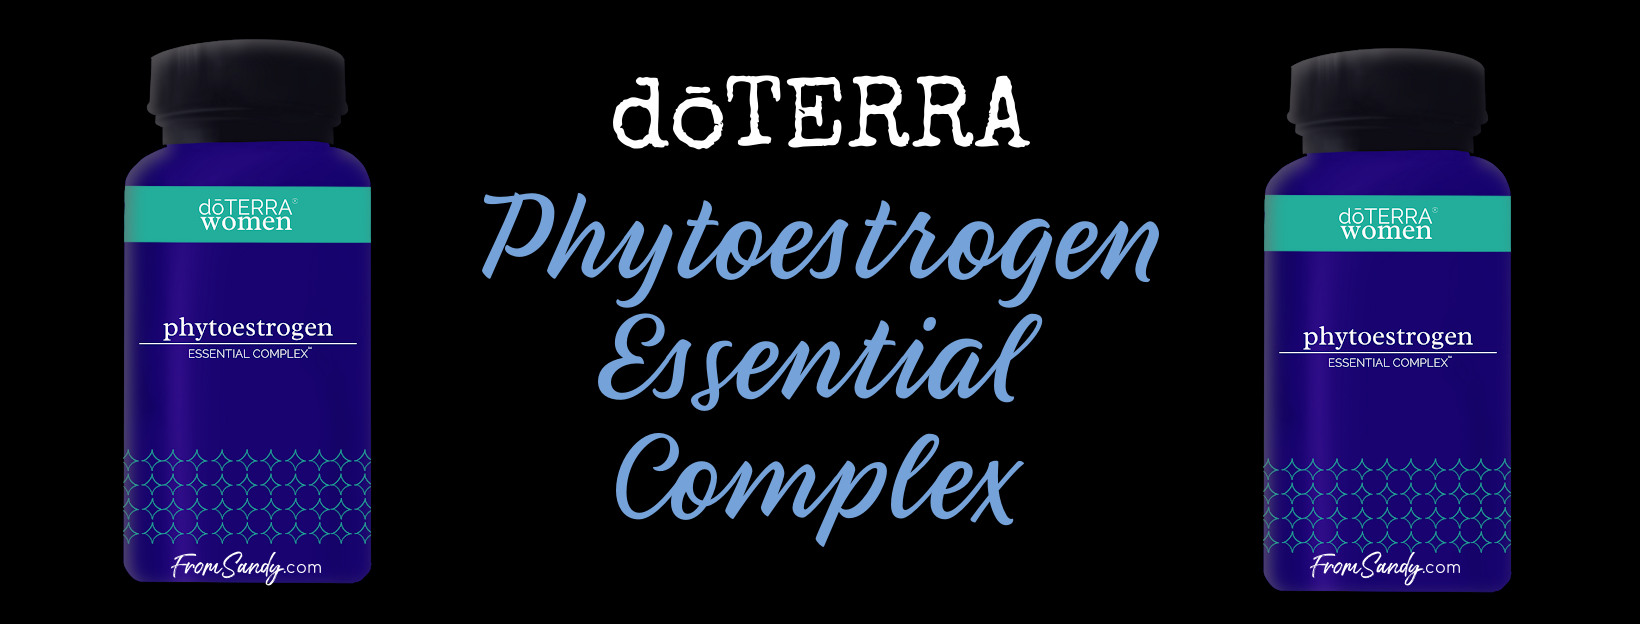 dōTERRA Phytoestrogen | From Sandy